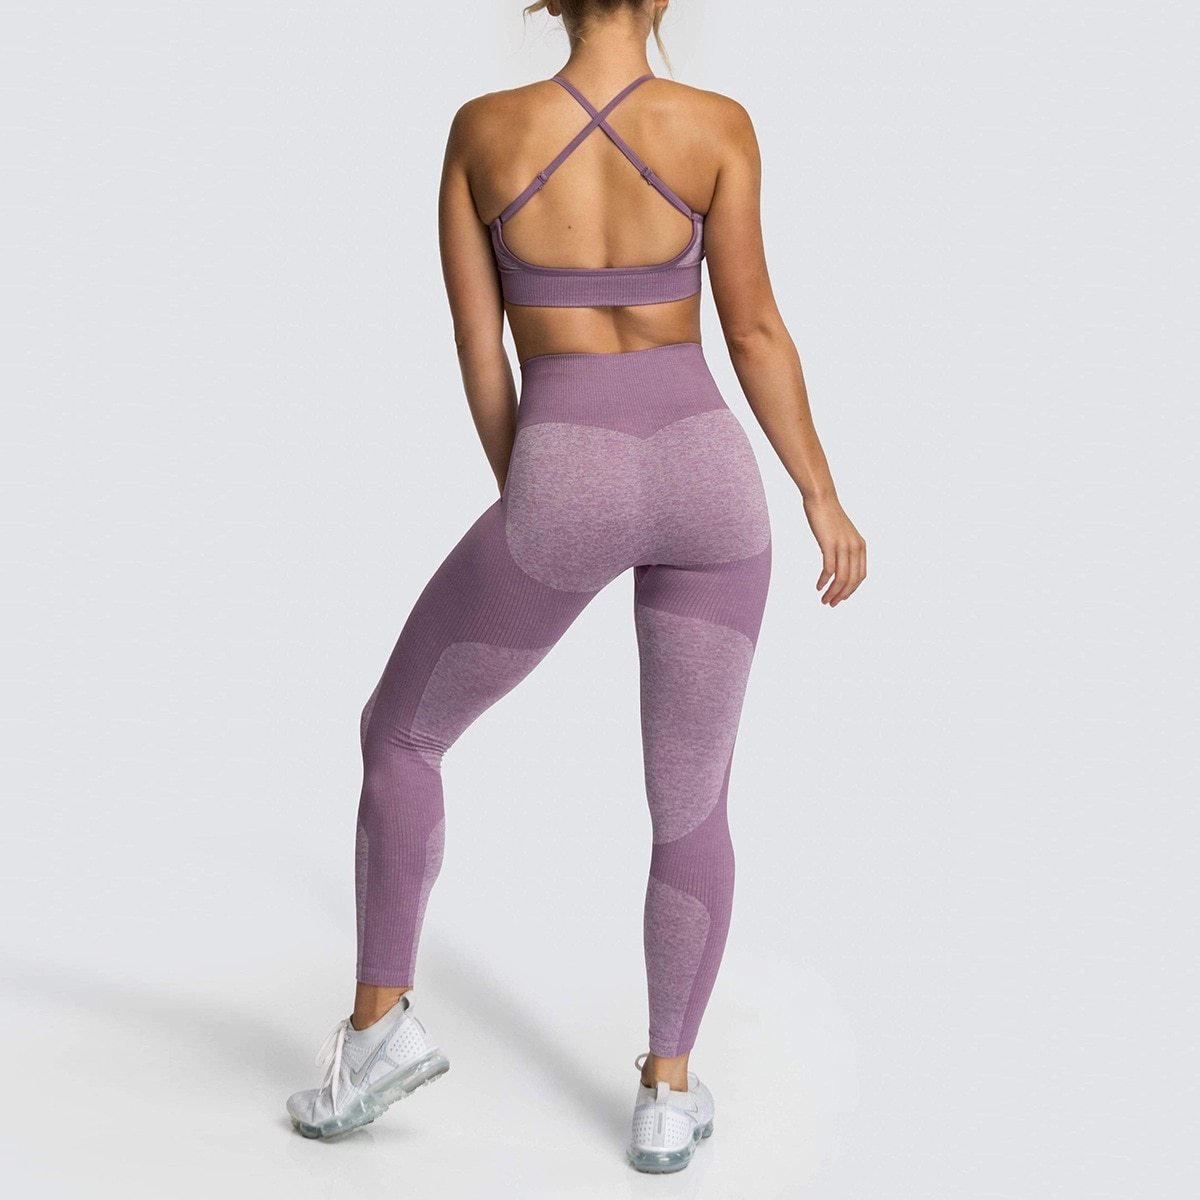 Lycra Seamless Yoga Set Women Fitness Bra Top Sportswear Woman Gym